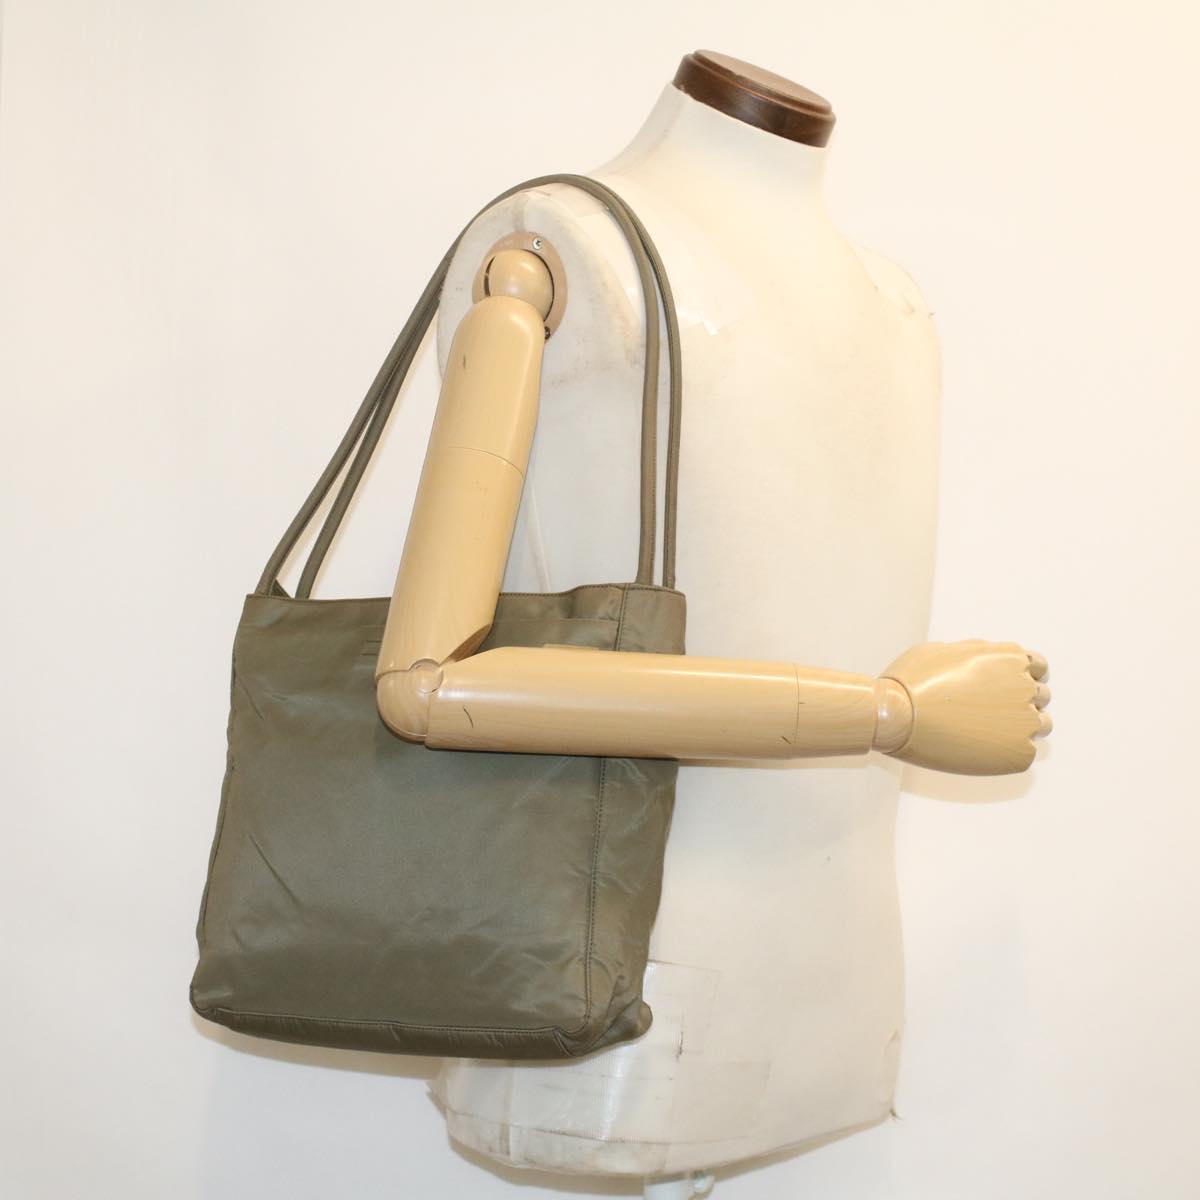 PRADA Shoulder Bag Nylon Khaki Auth cl556